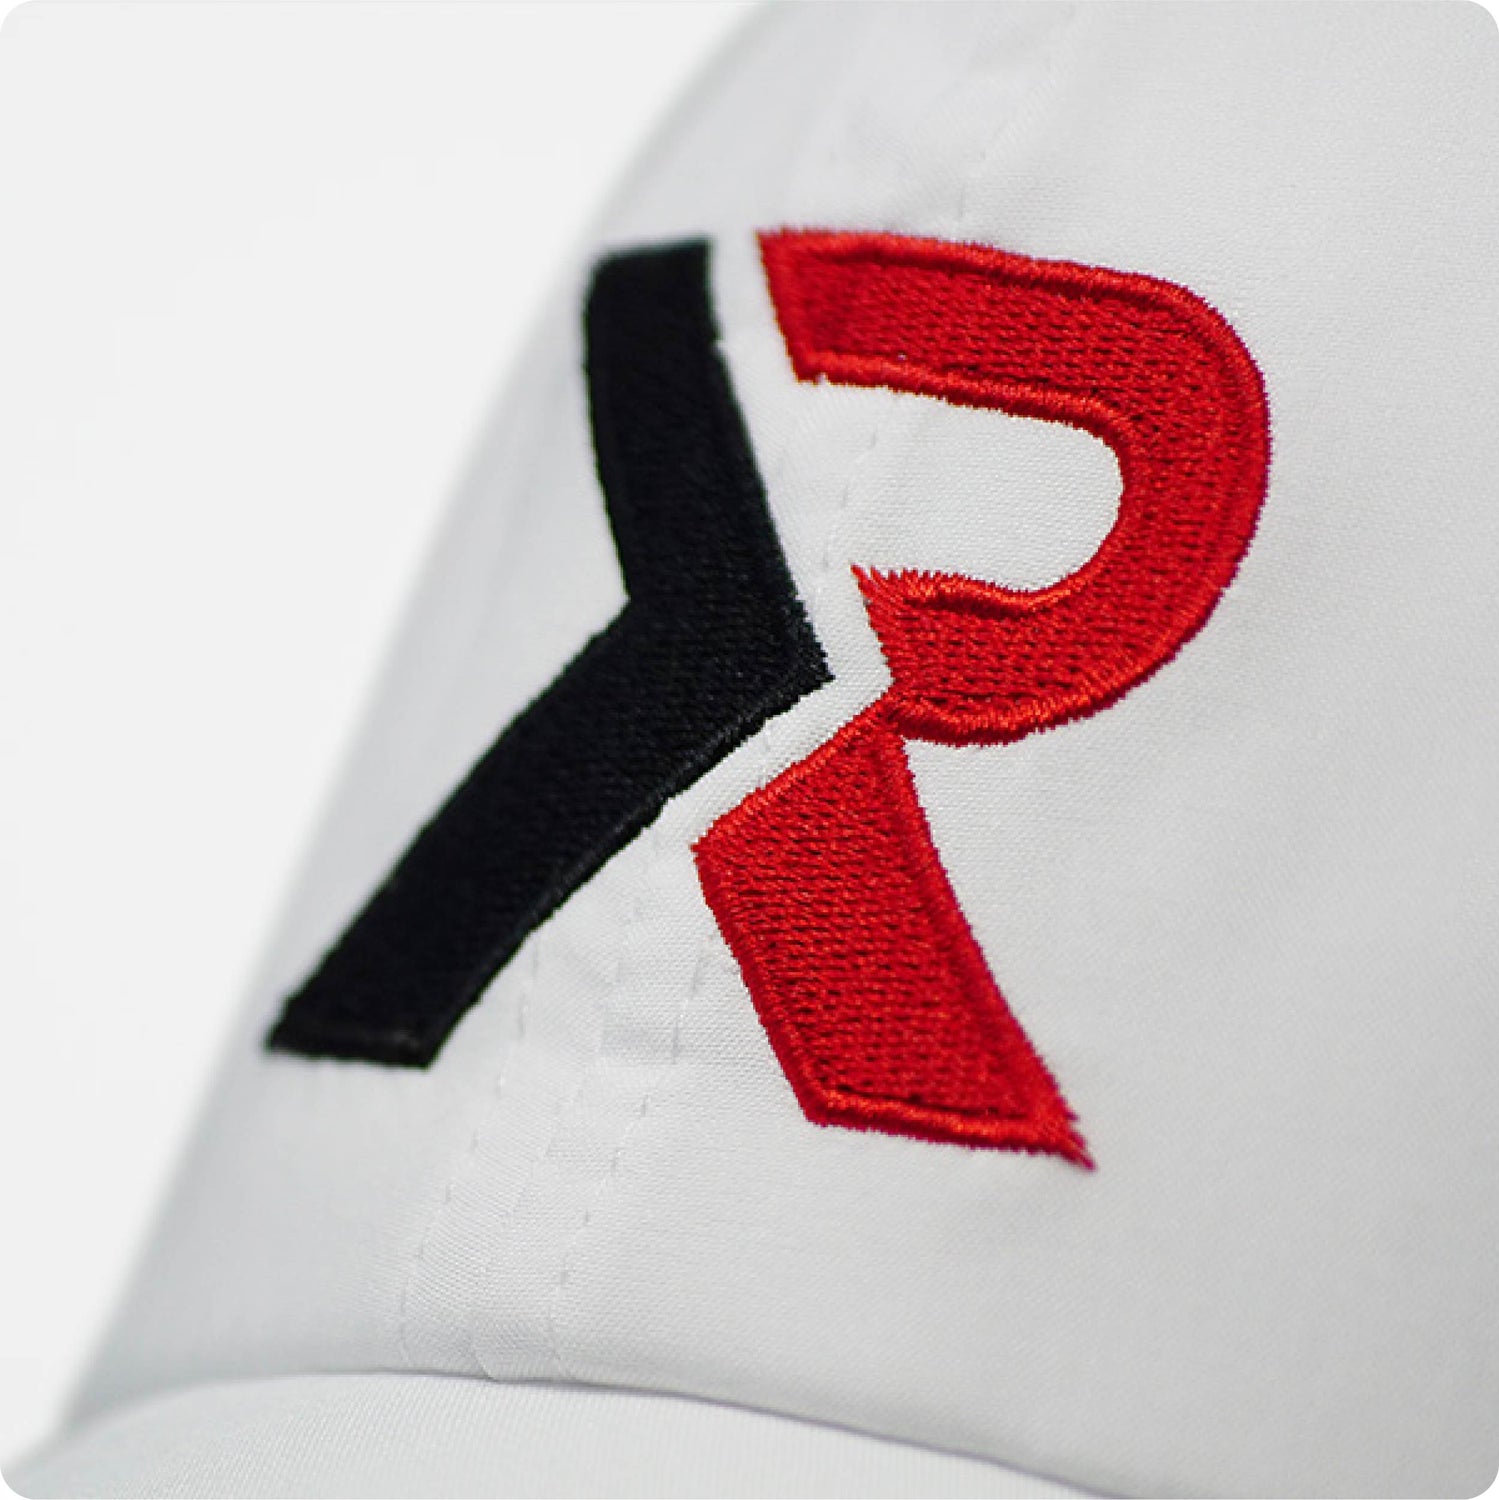 ProXR Pickleball Hat White/Red